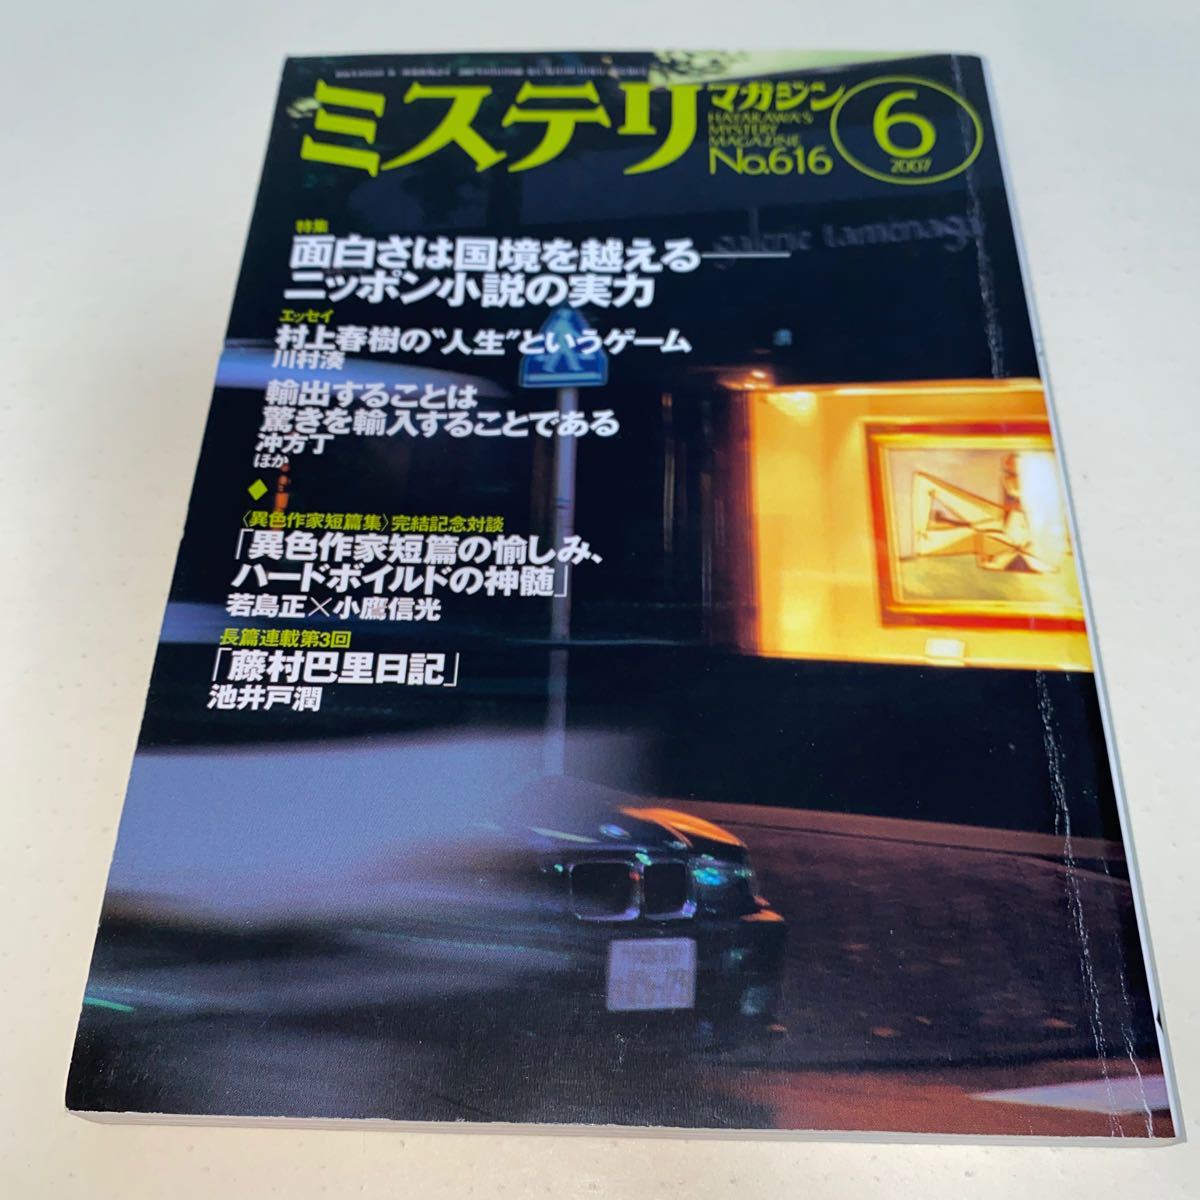 4 mistake teli magazine 2007 year 6 number No.616 Murakami Haruki. life and game river .. against .. island regular × small hawk confidence light . well .